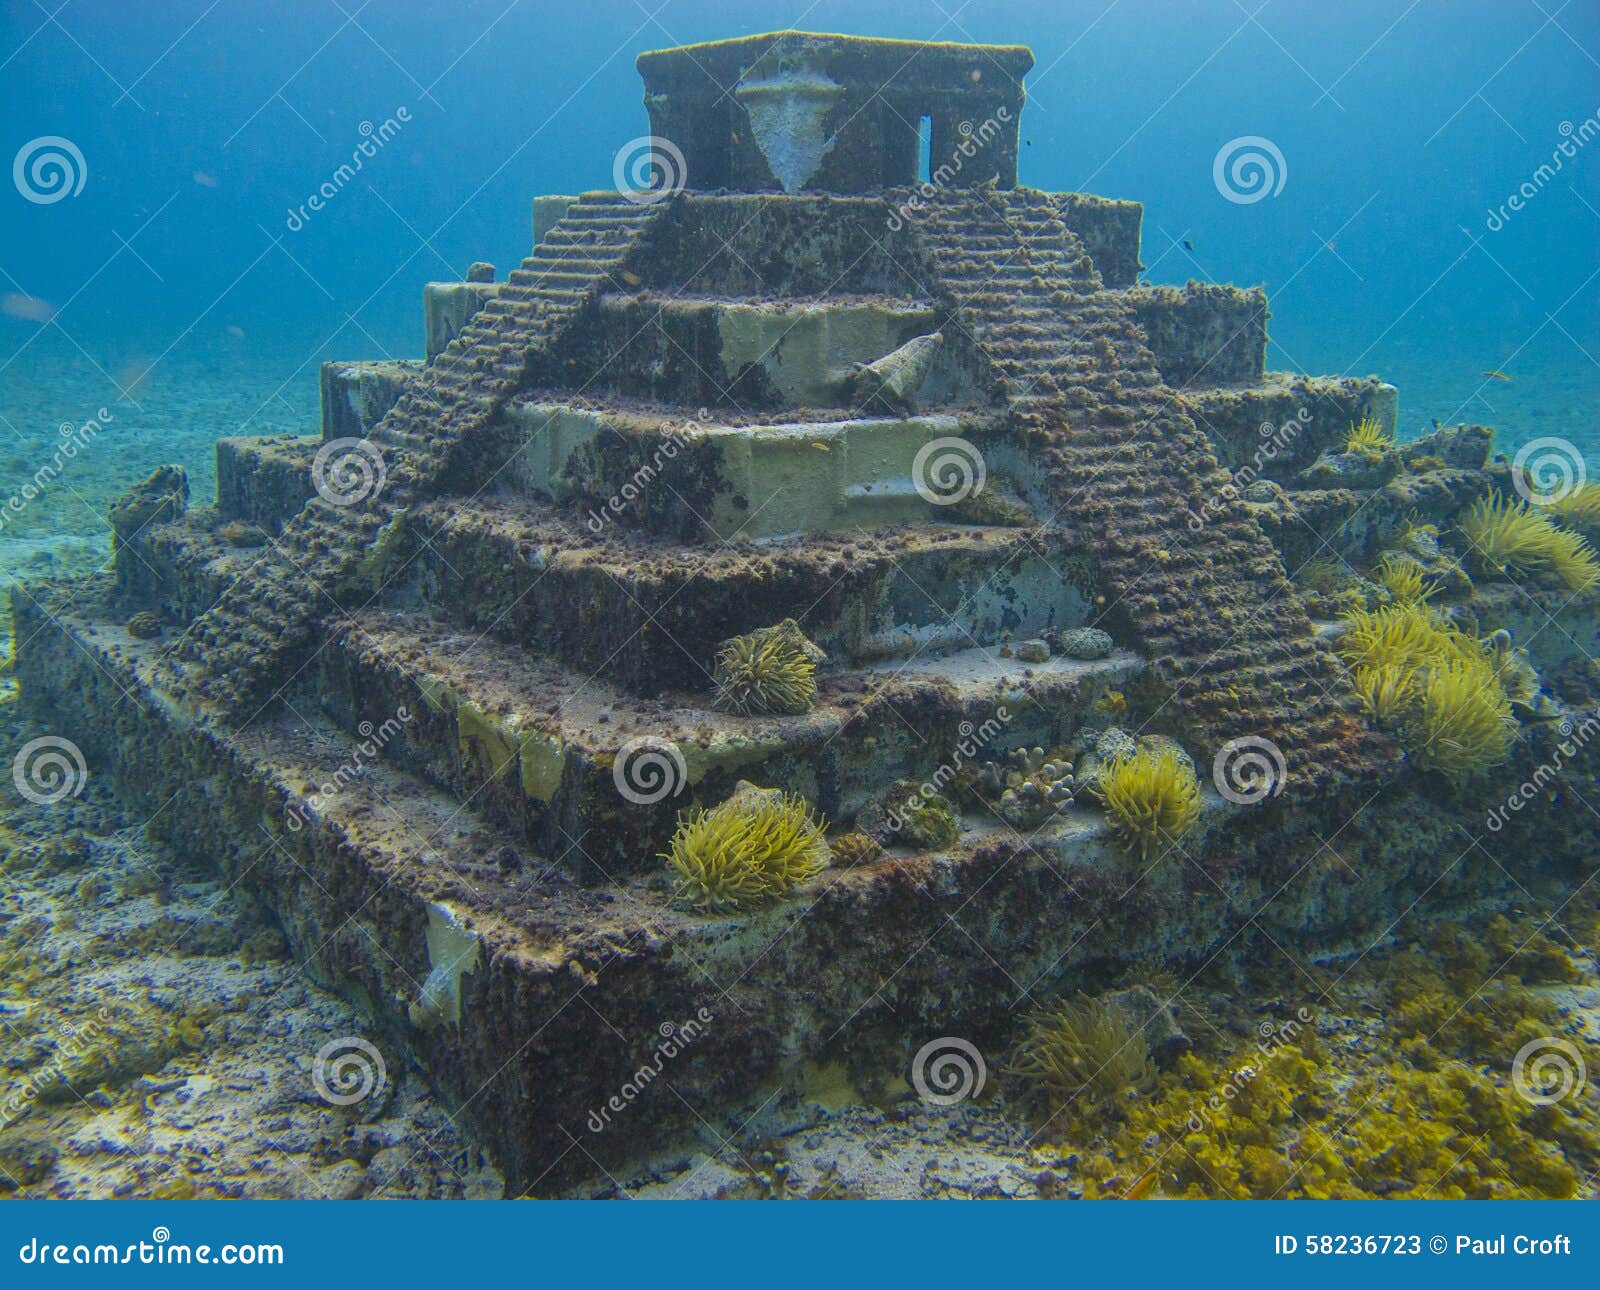 underwater pyramid